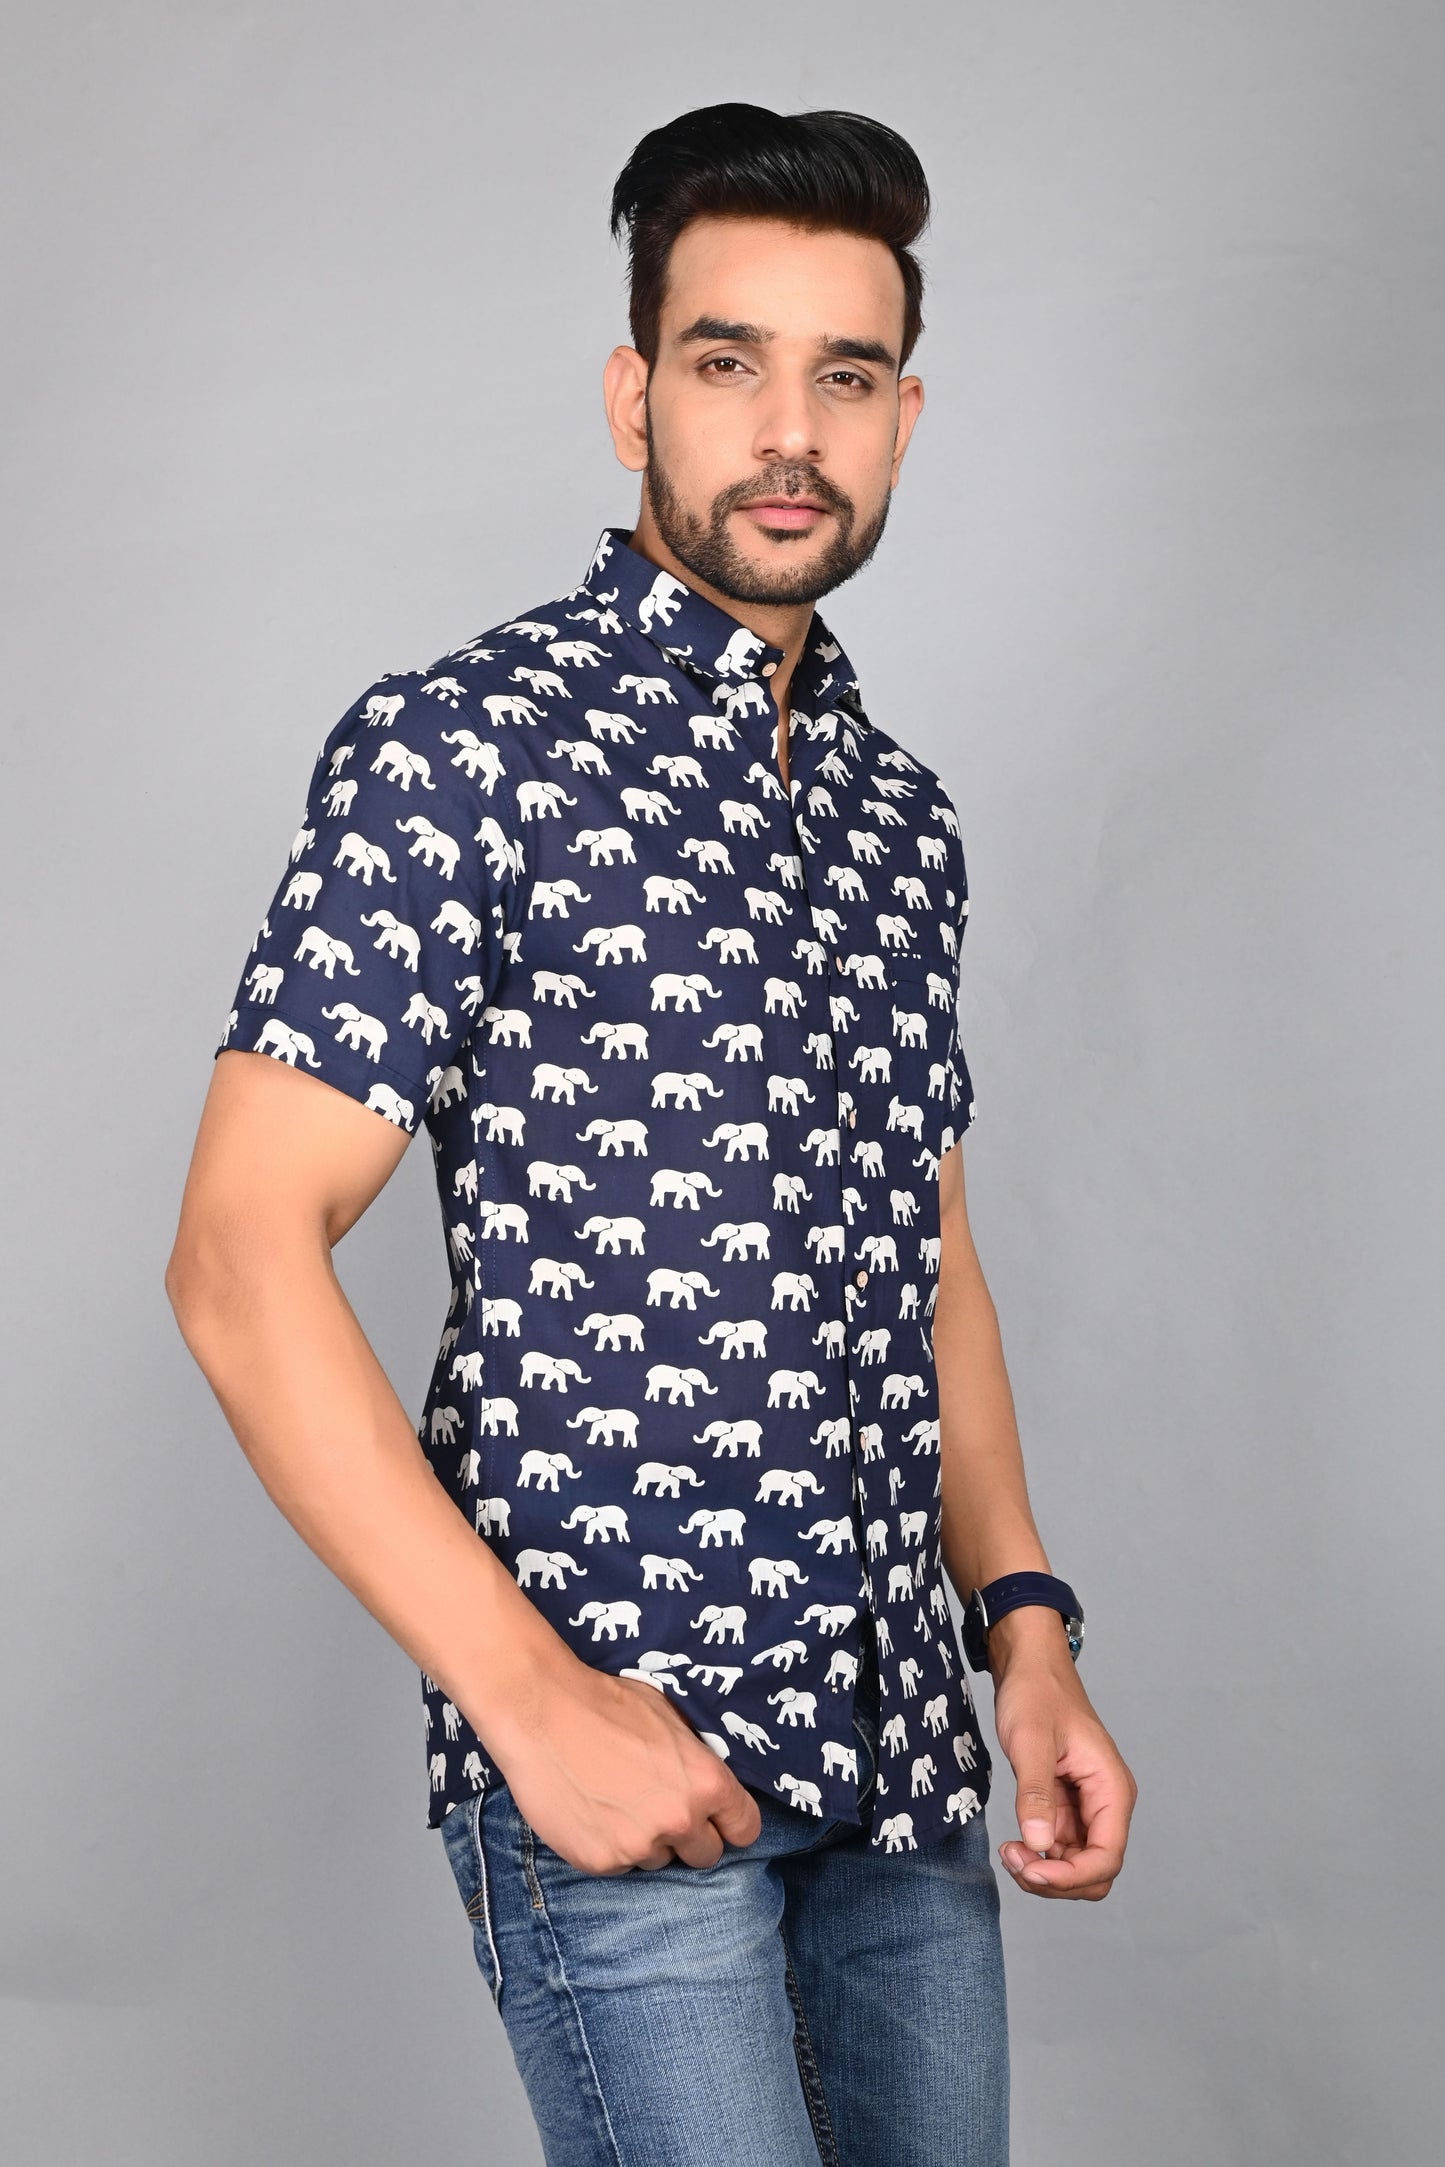 Men's Printed Elephant Half-Sleeves shirts